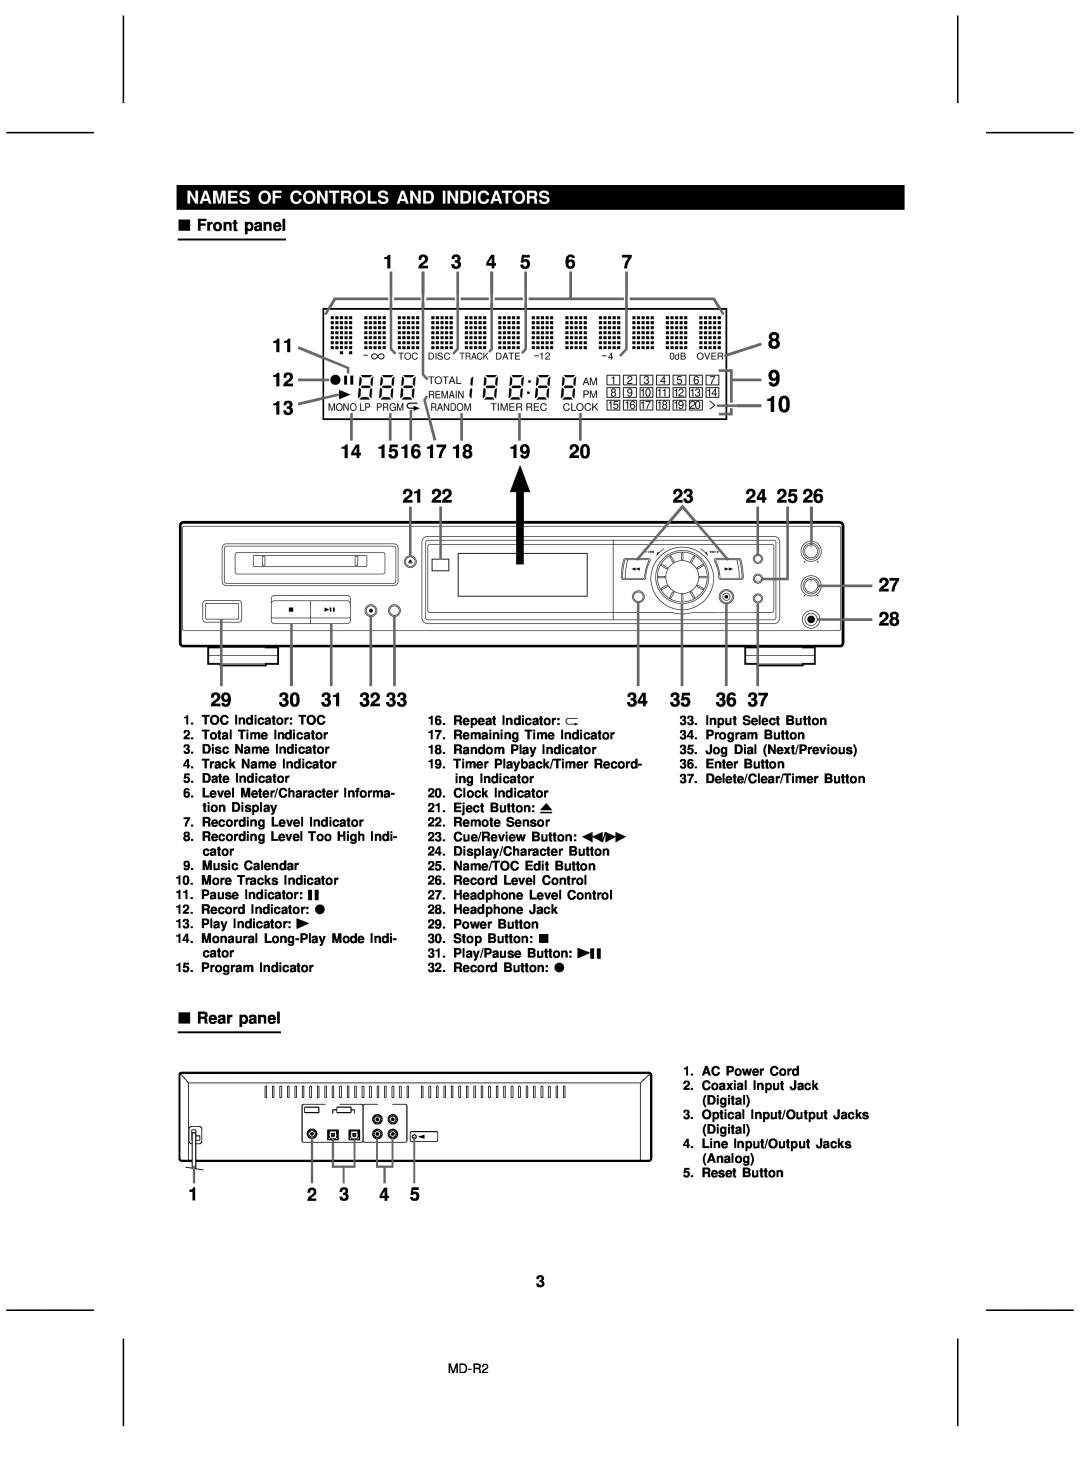 Kenwood MD-R2 operation manual 8 9 10, 11 12 13, 1516 17, 24 25, 27 28 